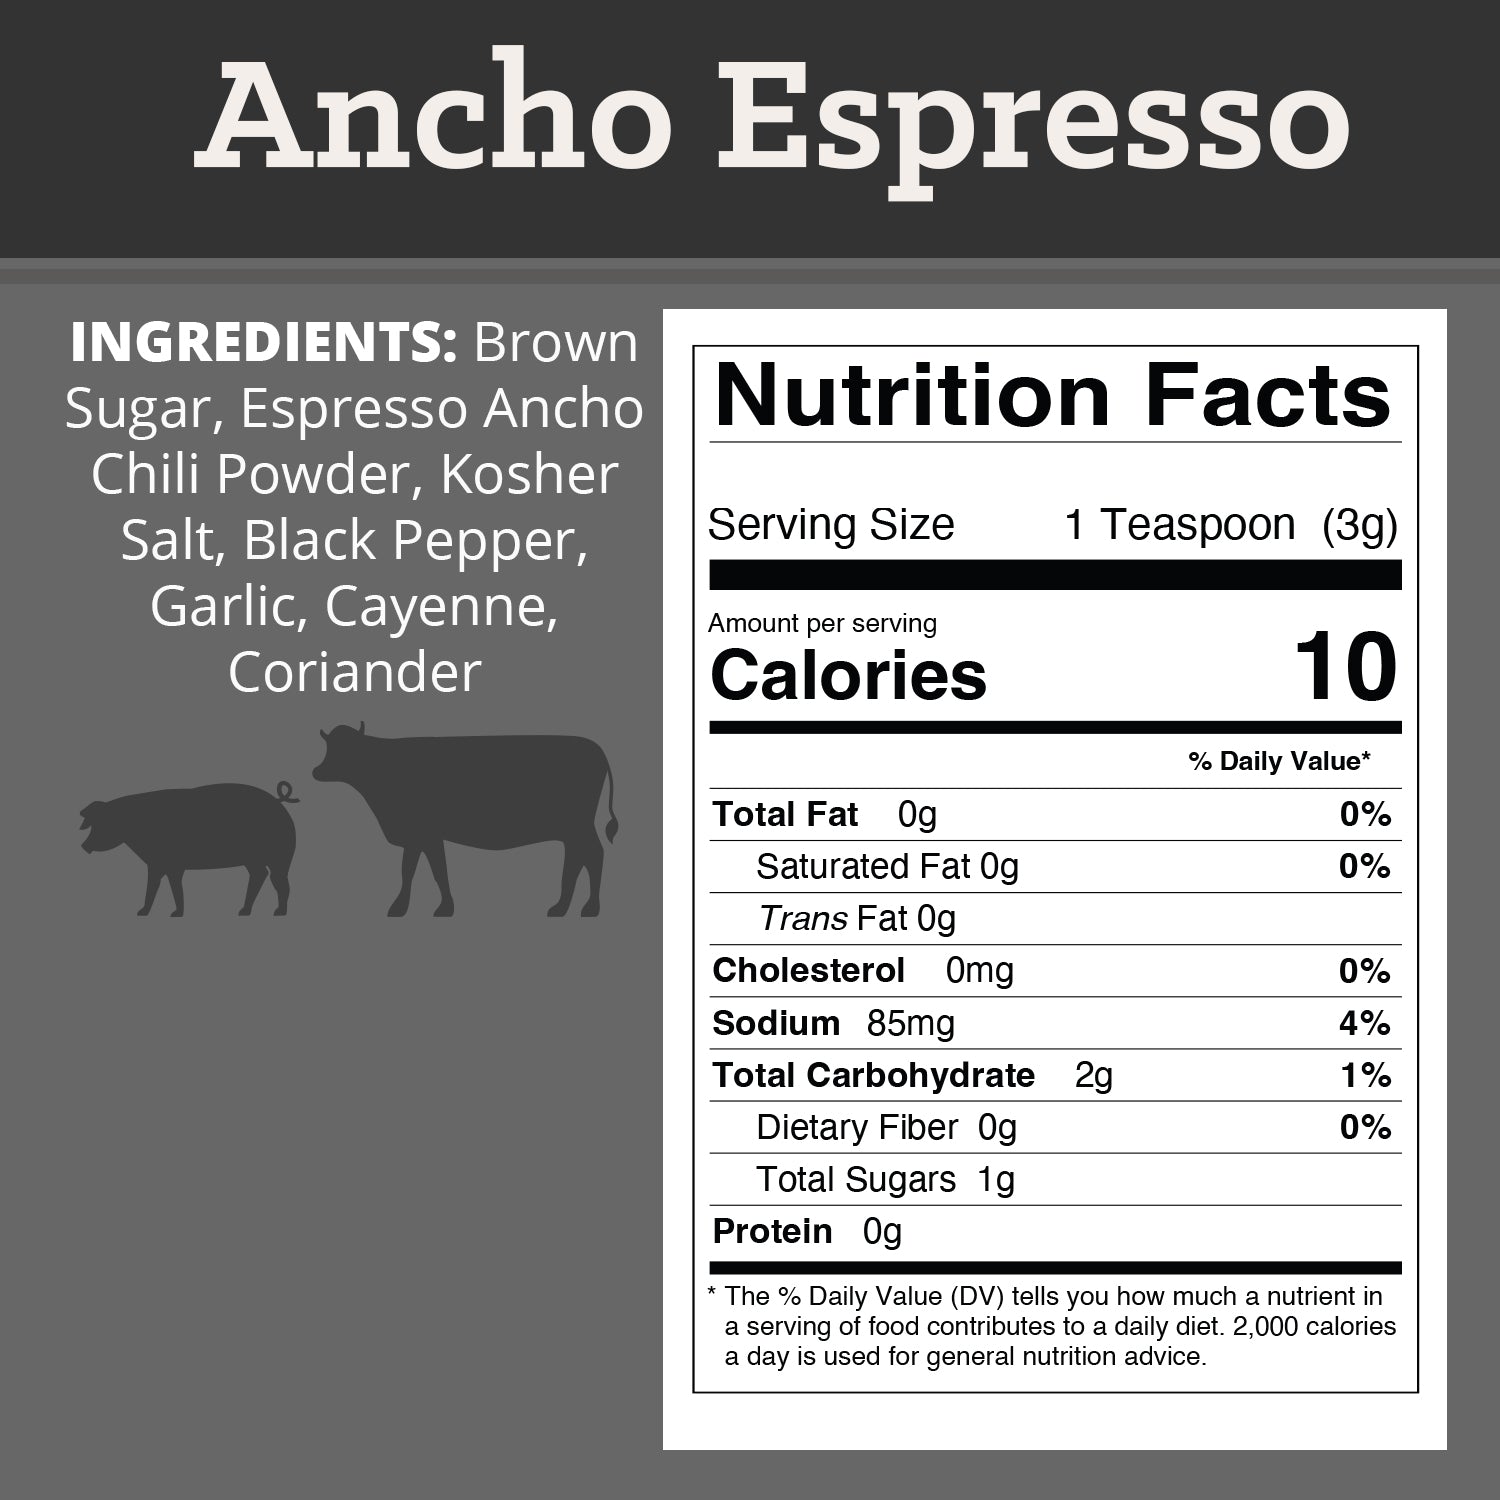 The Spice Lab Ancho Chili & Coffee Rub - 7017